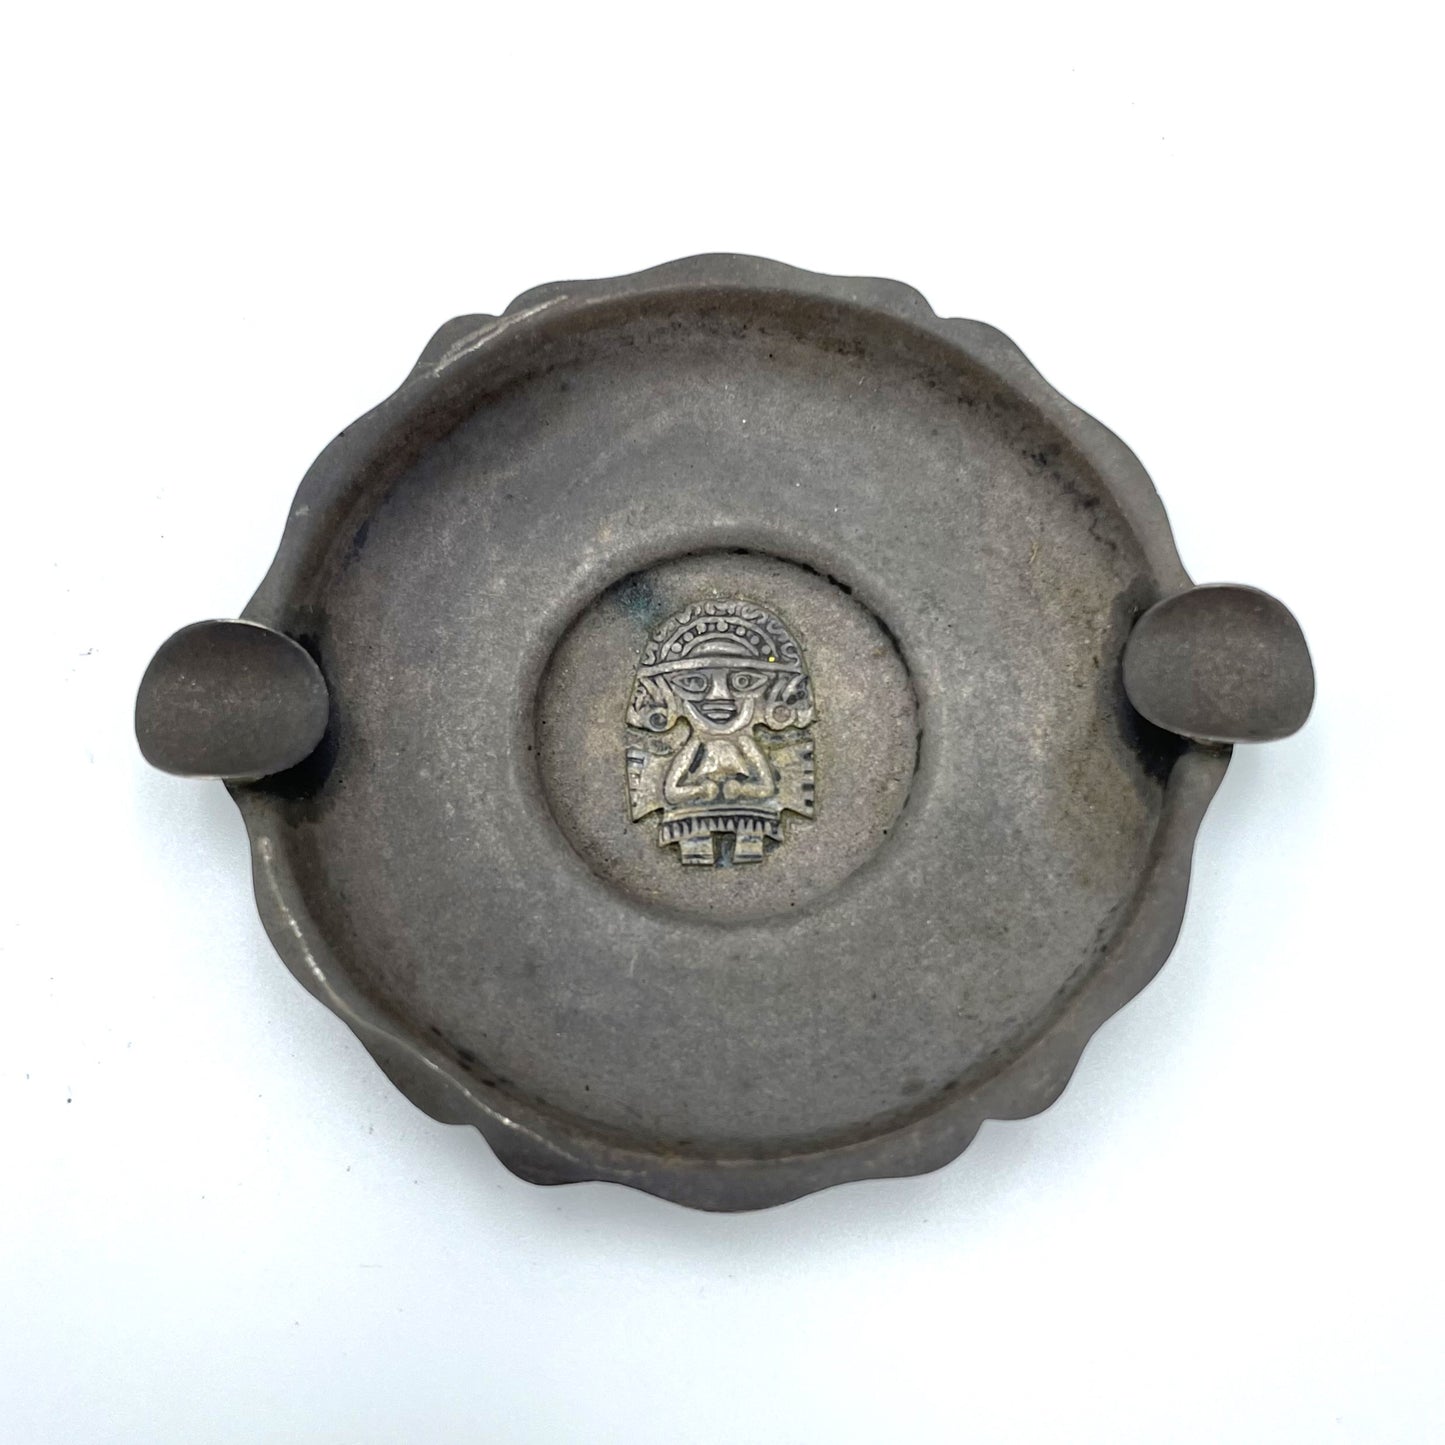 Antique Sterling Silver Peruvian Ashtray - 8cm